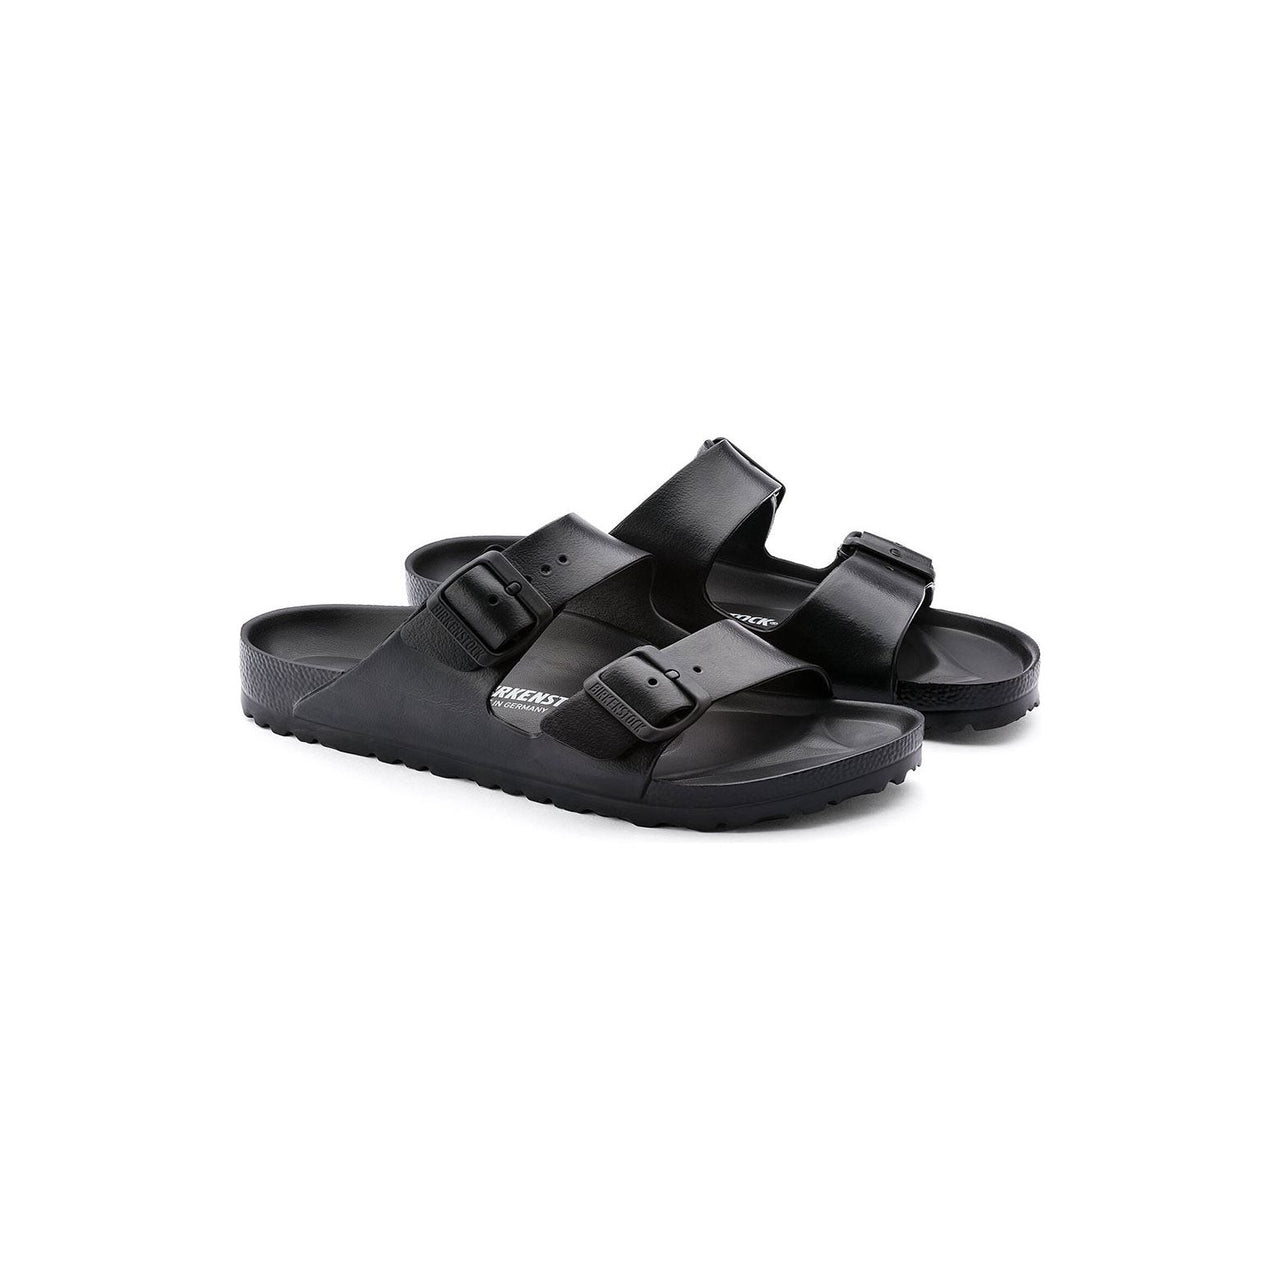 Arizona Eva Sandals Black with lightweight and waterproof design for comfort 